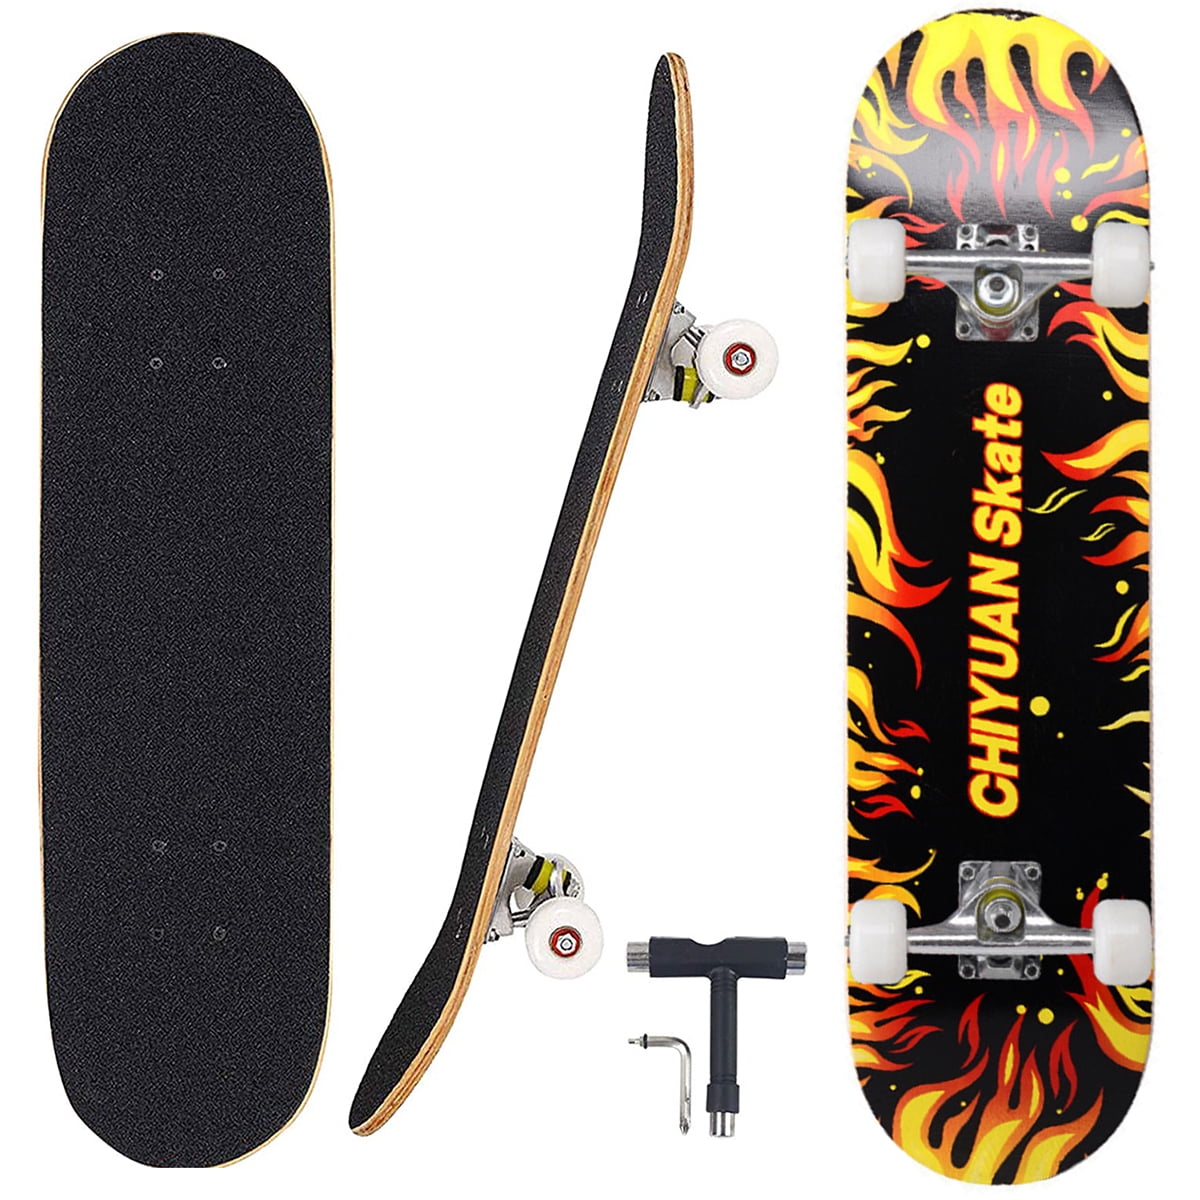 Skateboard 31x8 Pro Complete Skate Board 7 Layers Decks for Teens Adults Beginners 